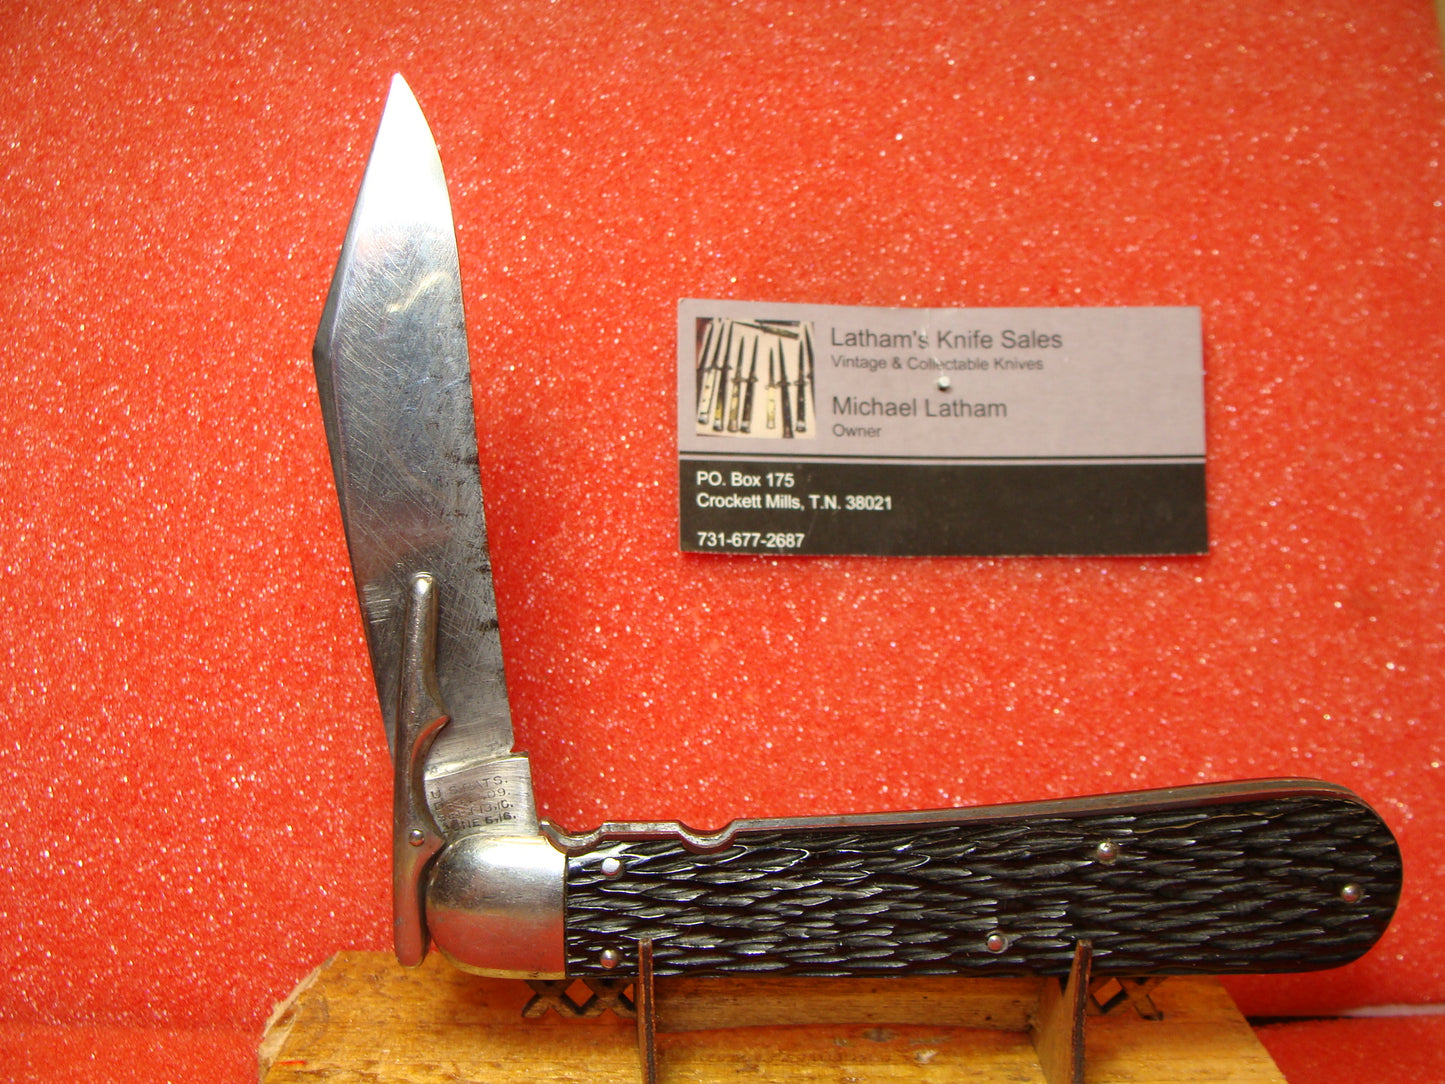 SCHRADE CUT CO. WALDEN NY 1916-46 VINTAGE AMERICAN AUTOMATIC KNIFE 4 7/8" HUNTER PRIDE SWING GUARD BLACK IMITATION JIGGED HANDLES